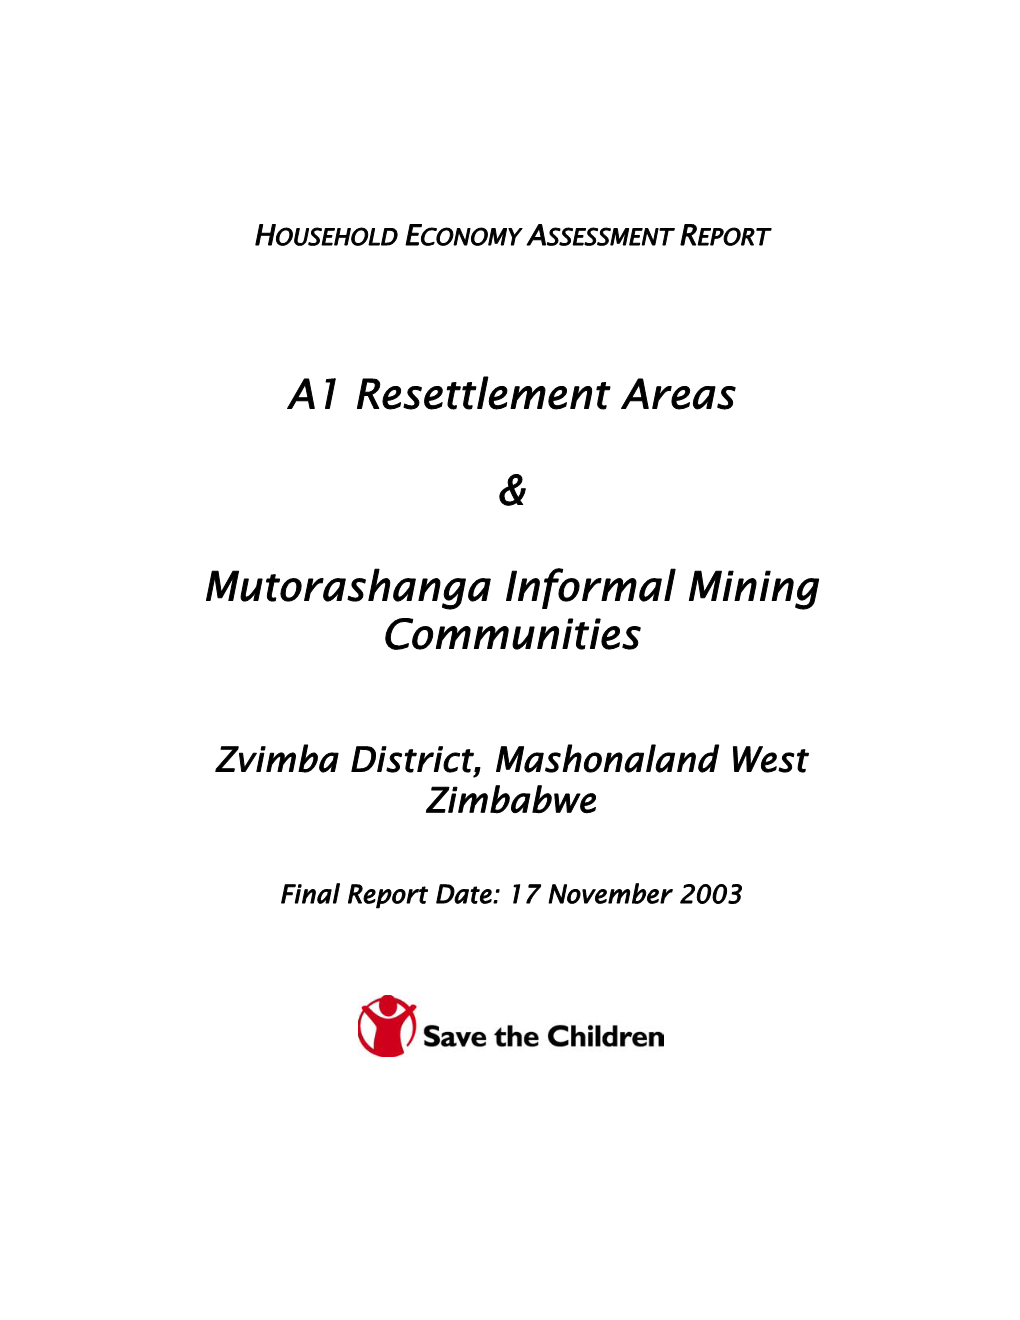 A1 Resettlement Areas & Mutorashanga Informal Mining